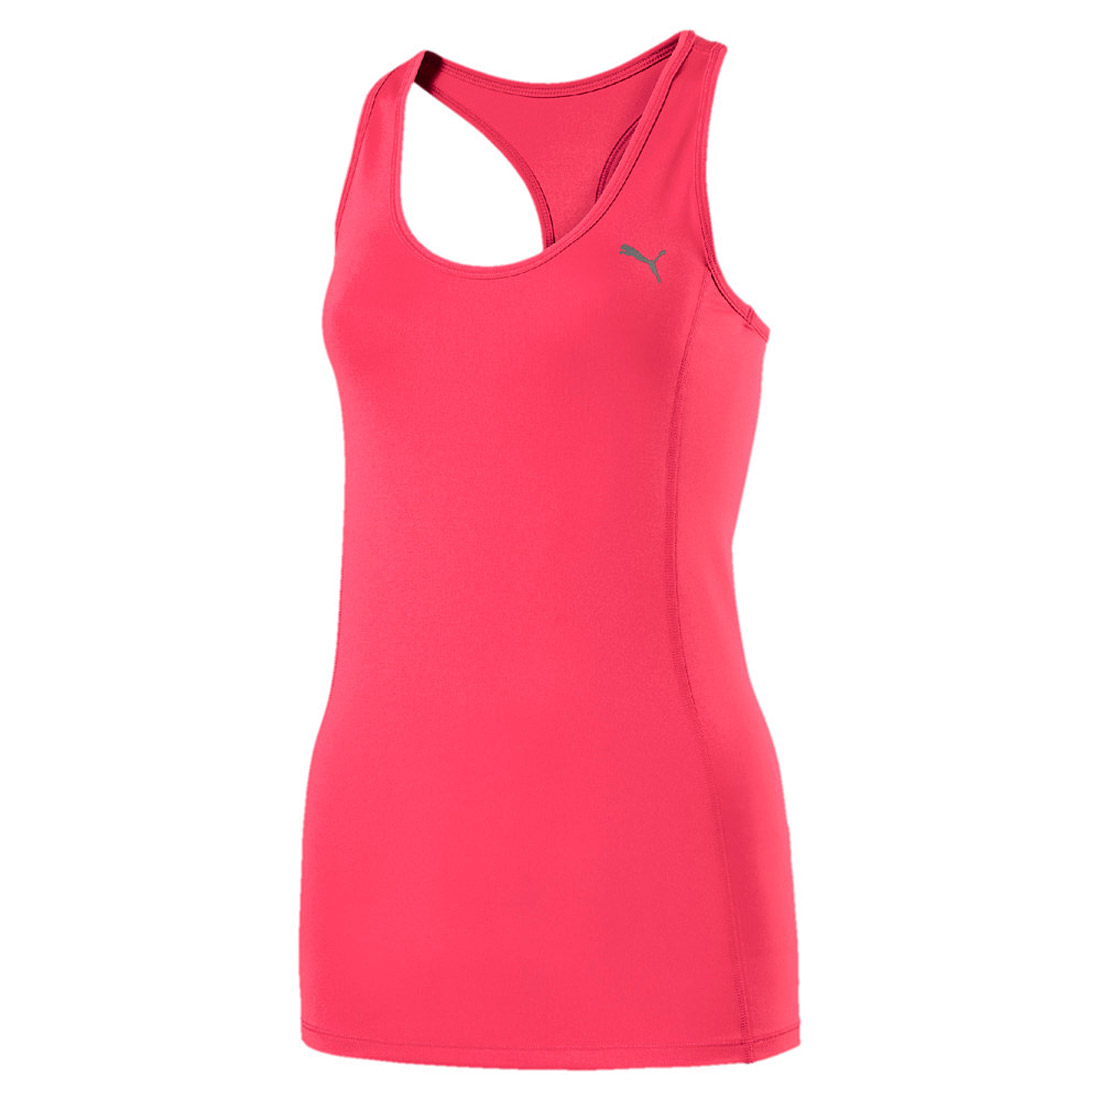 PUMA Damen Essential Layer Tank Top Trainingsshirt paradise pink